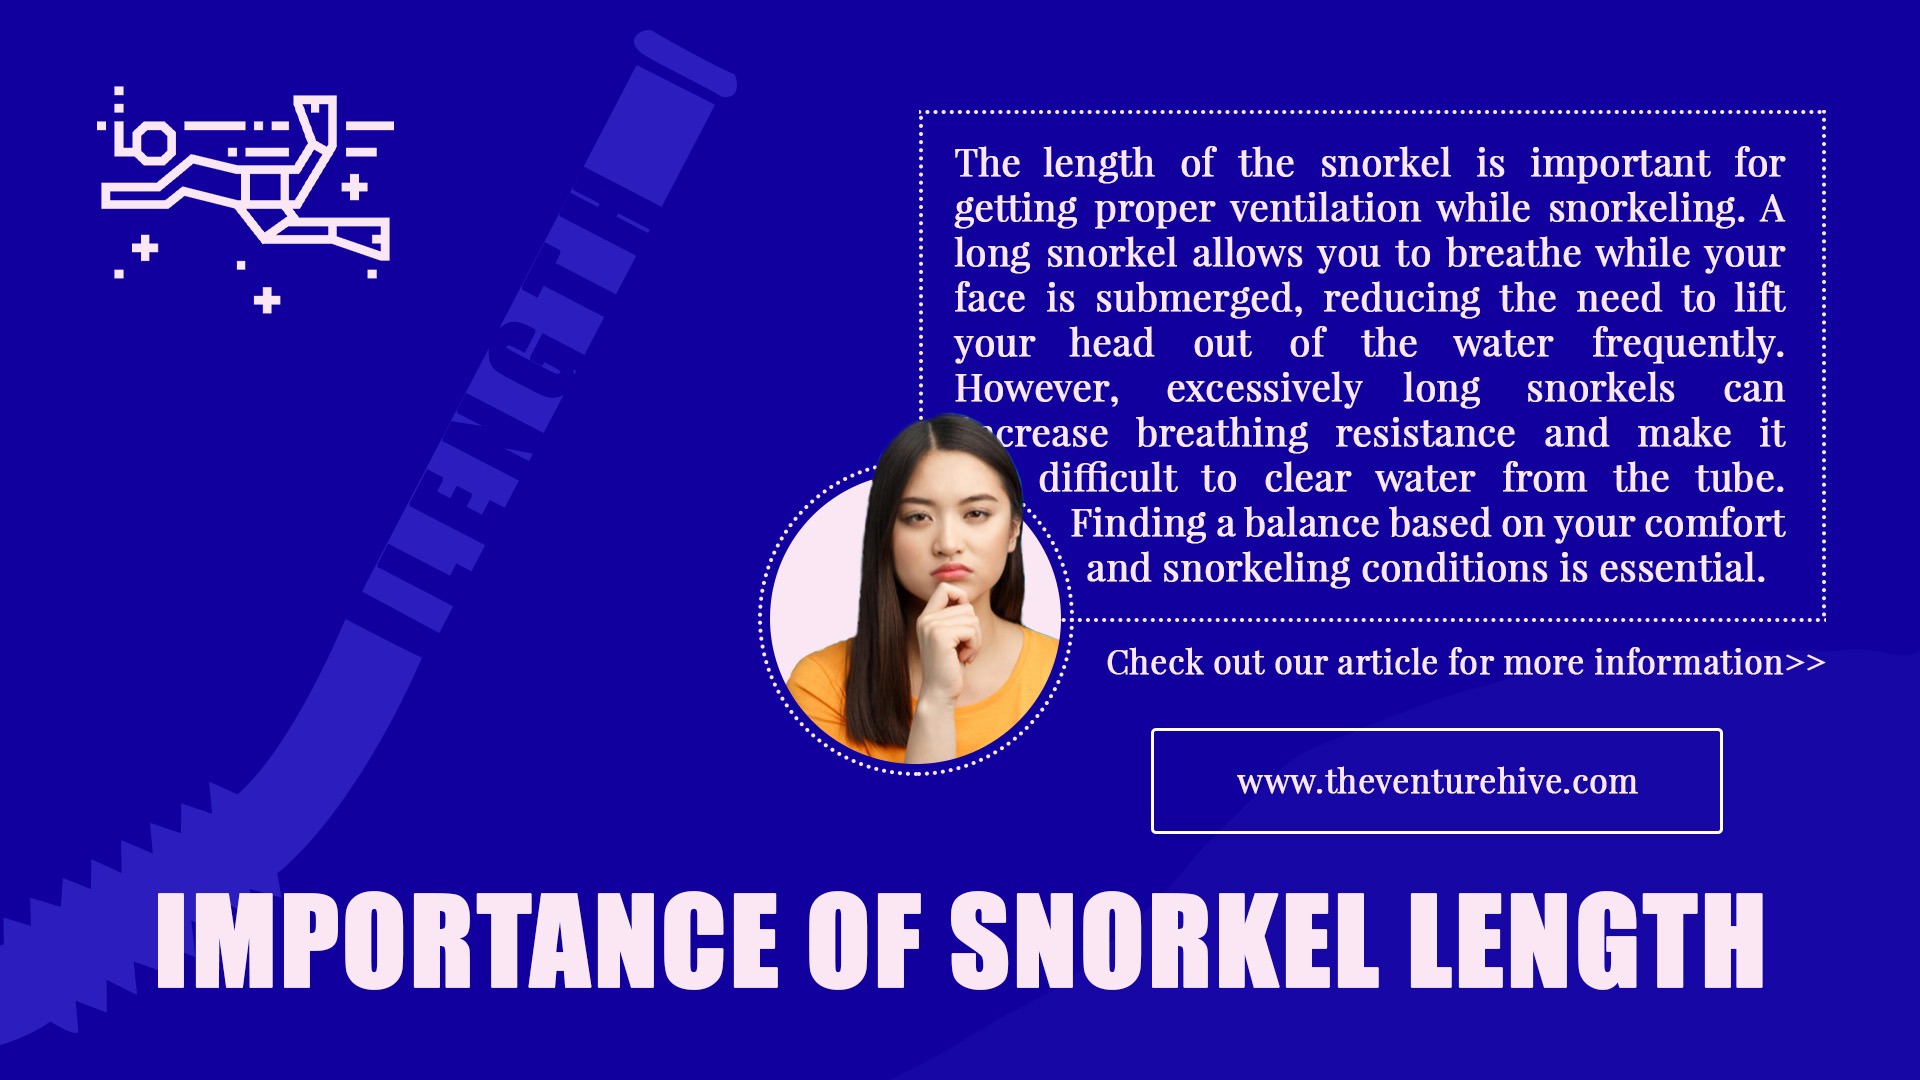 Importance of snorkel length